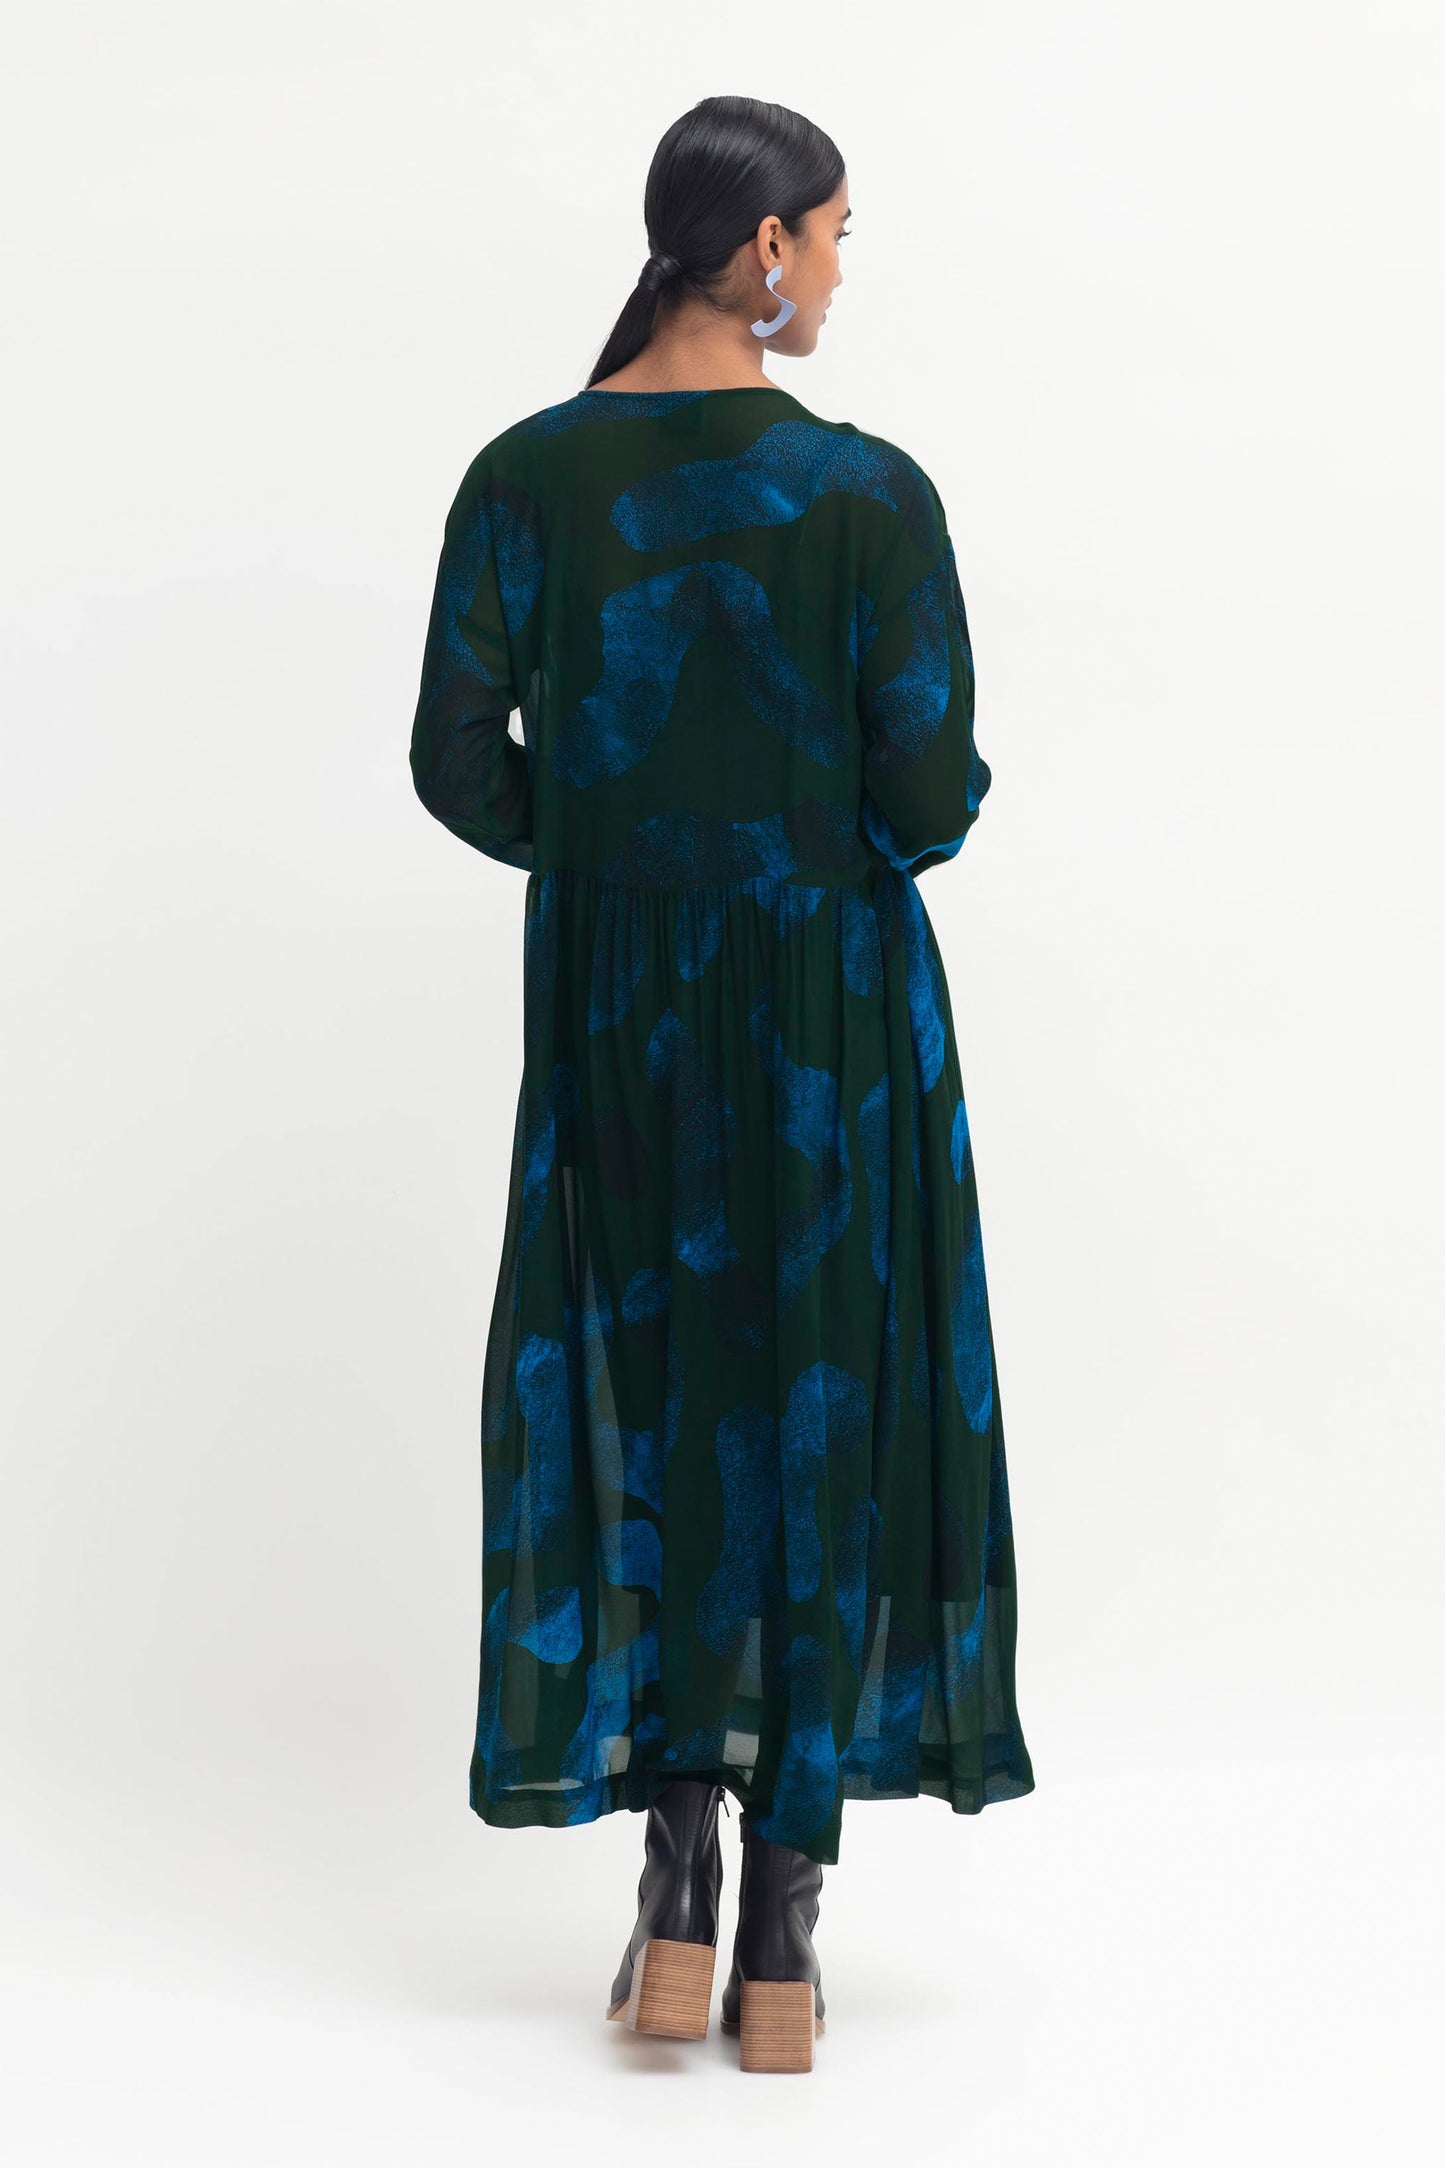 Gira Sheer Long Sleeve Black and Blue Print Dress with Slip Model Back | ANIMAL PRINT